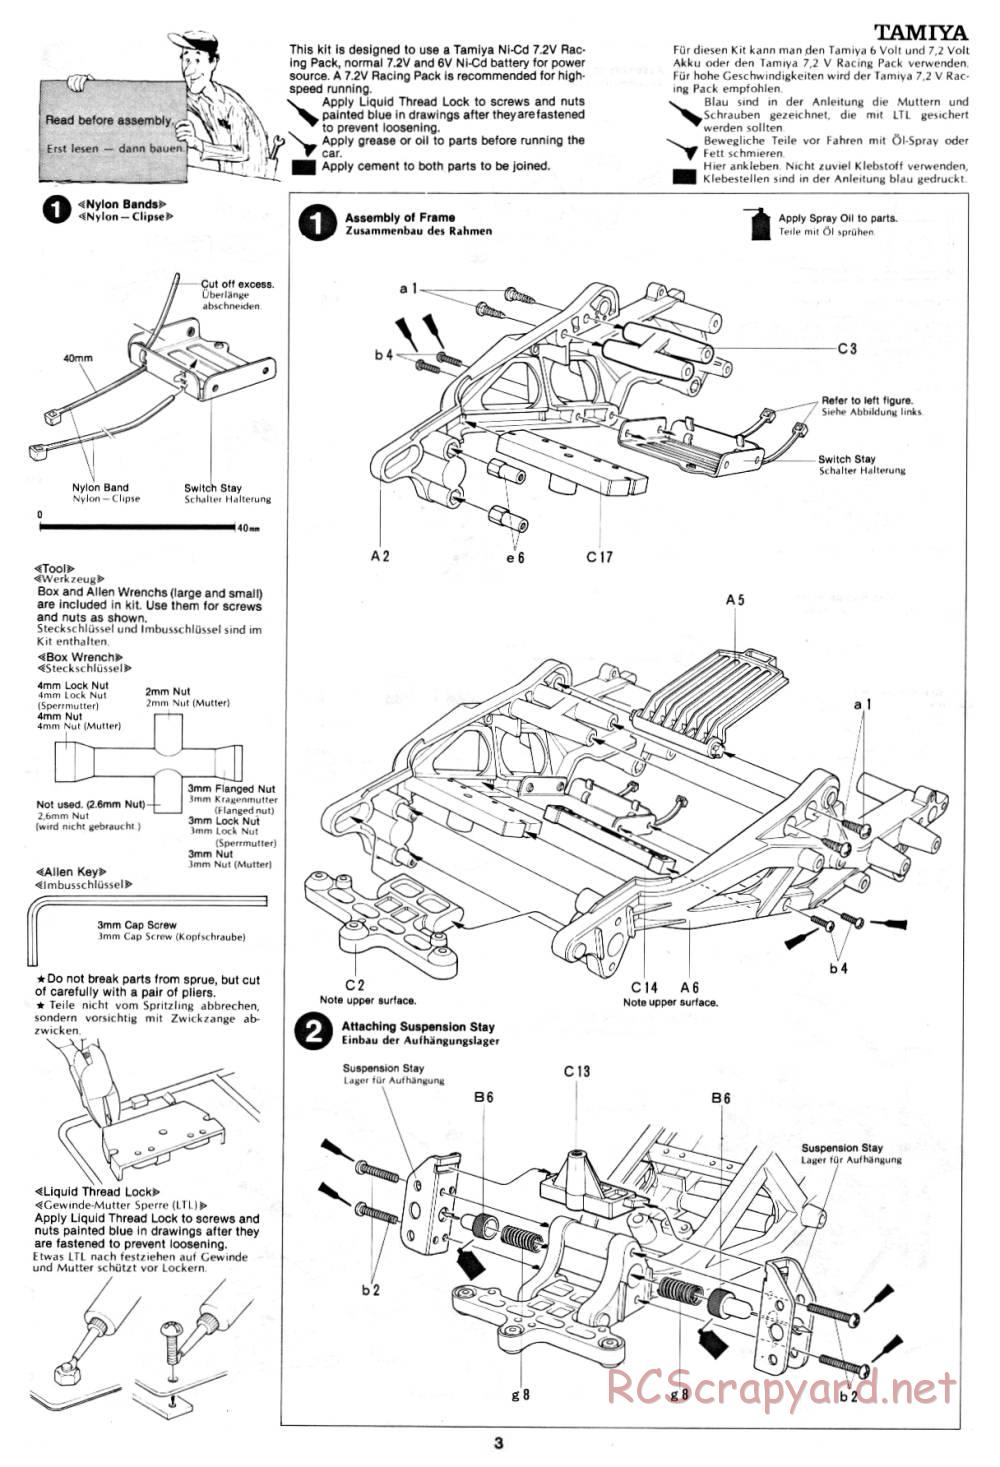 Tamiya - Subaru Brat - 58038 - Manual - Page 3